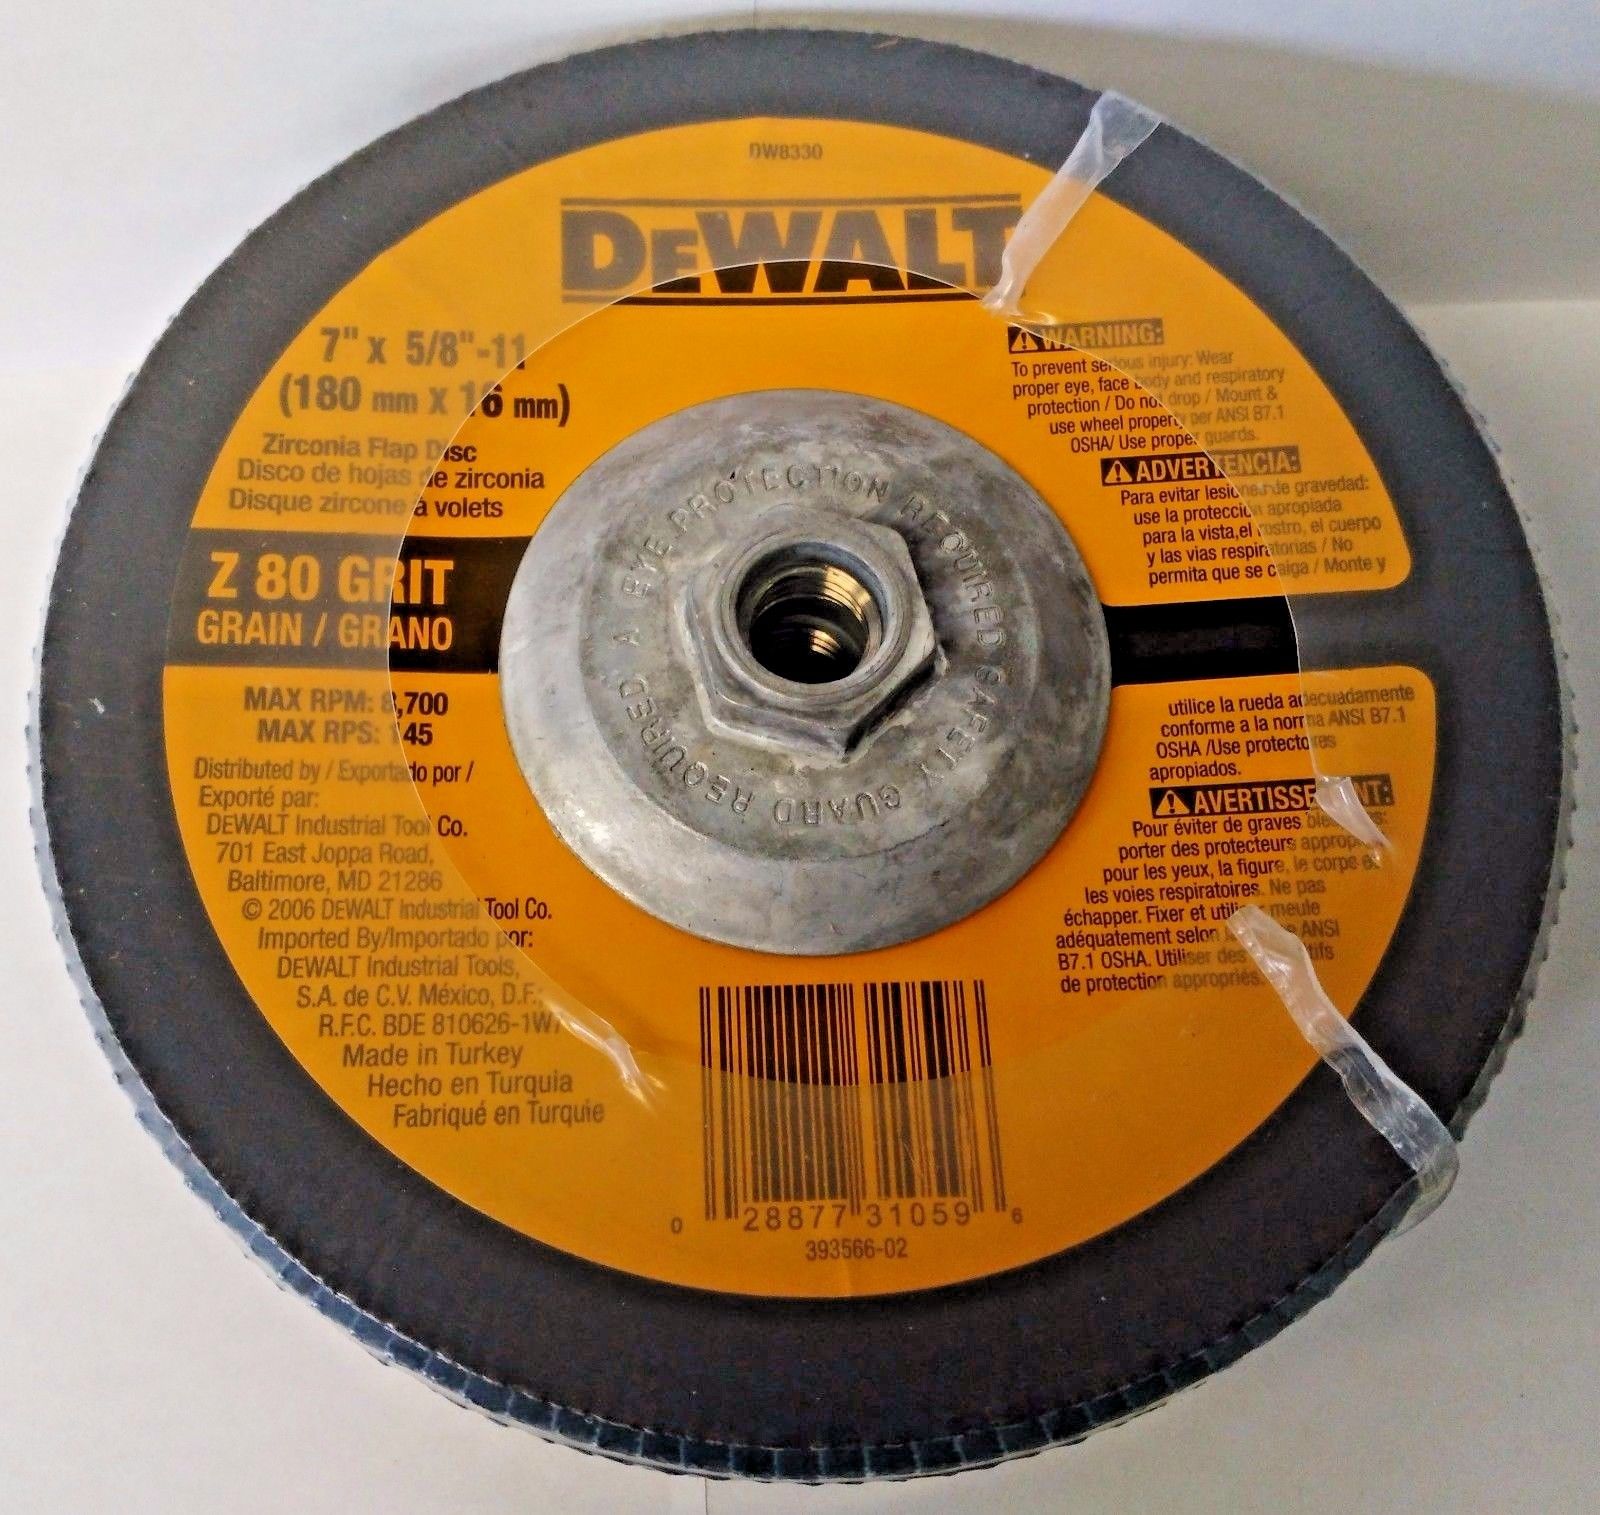 DeWalt DW8330 7" x 5/8" -11 Zirconia Z80 Grit Flap Discs 5 Pack